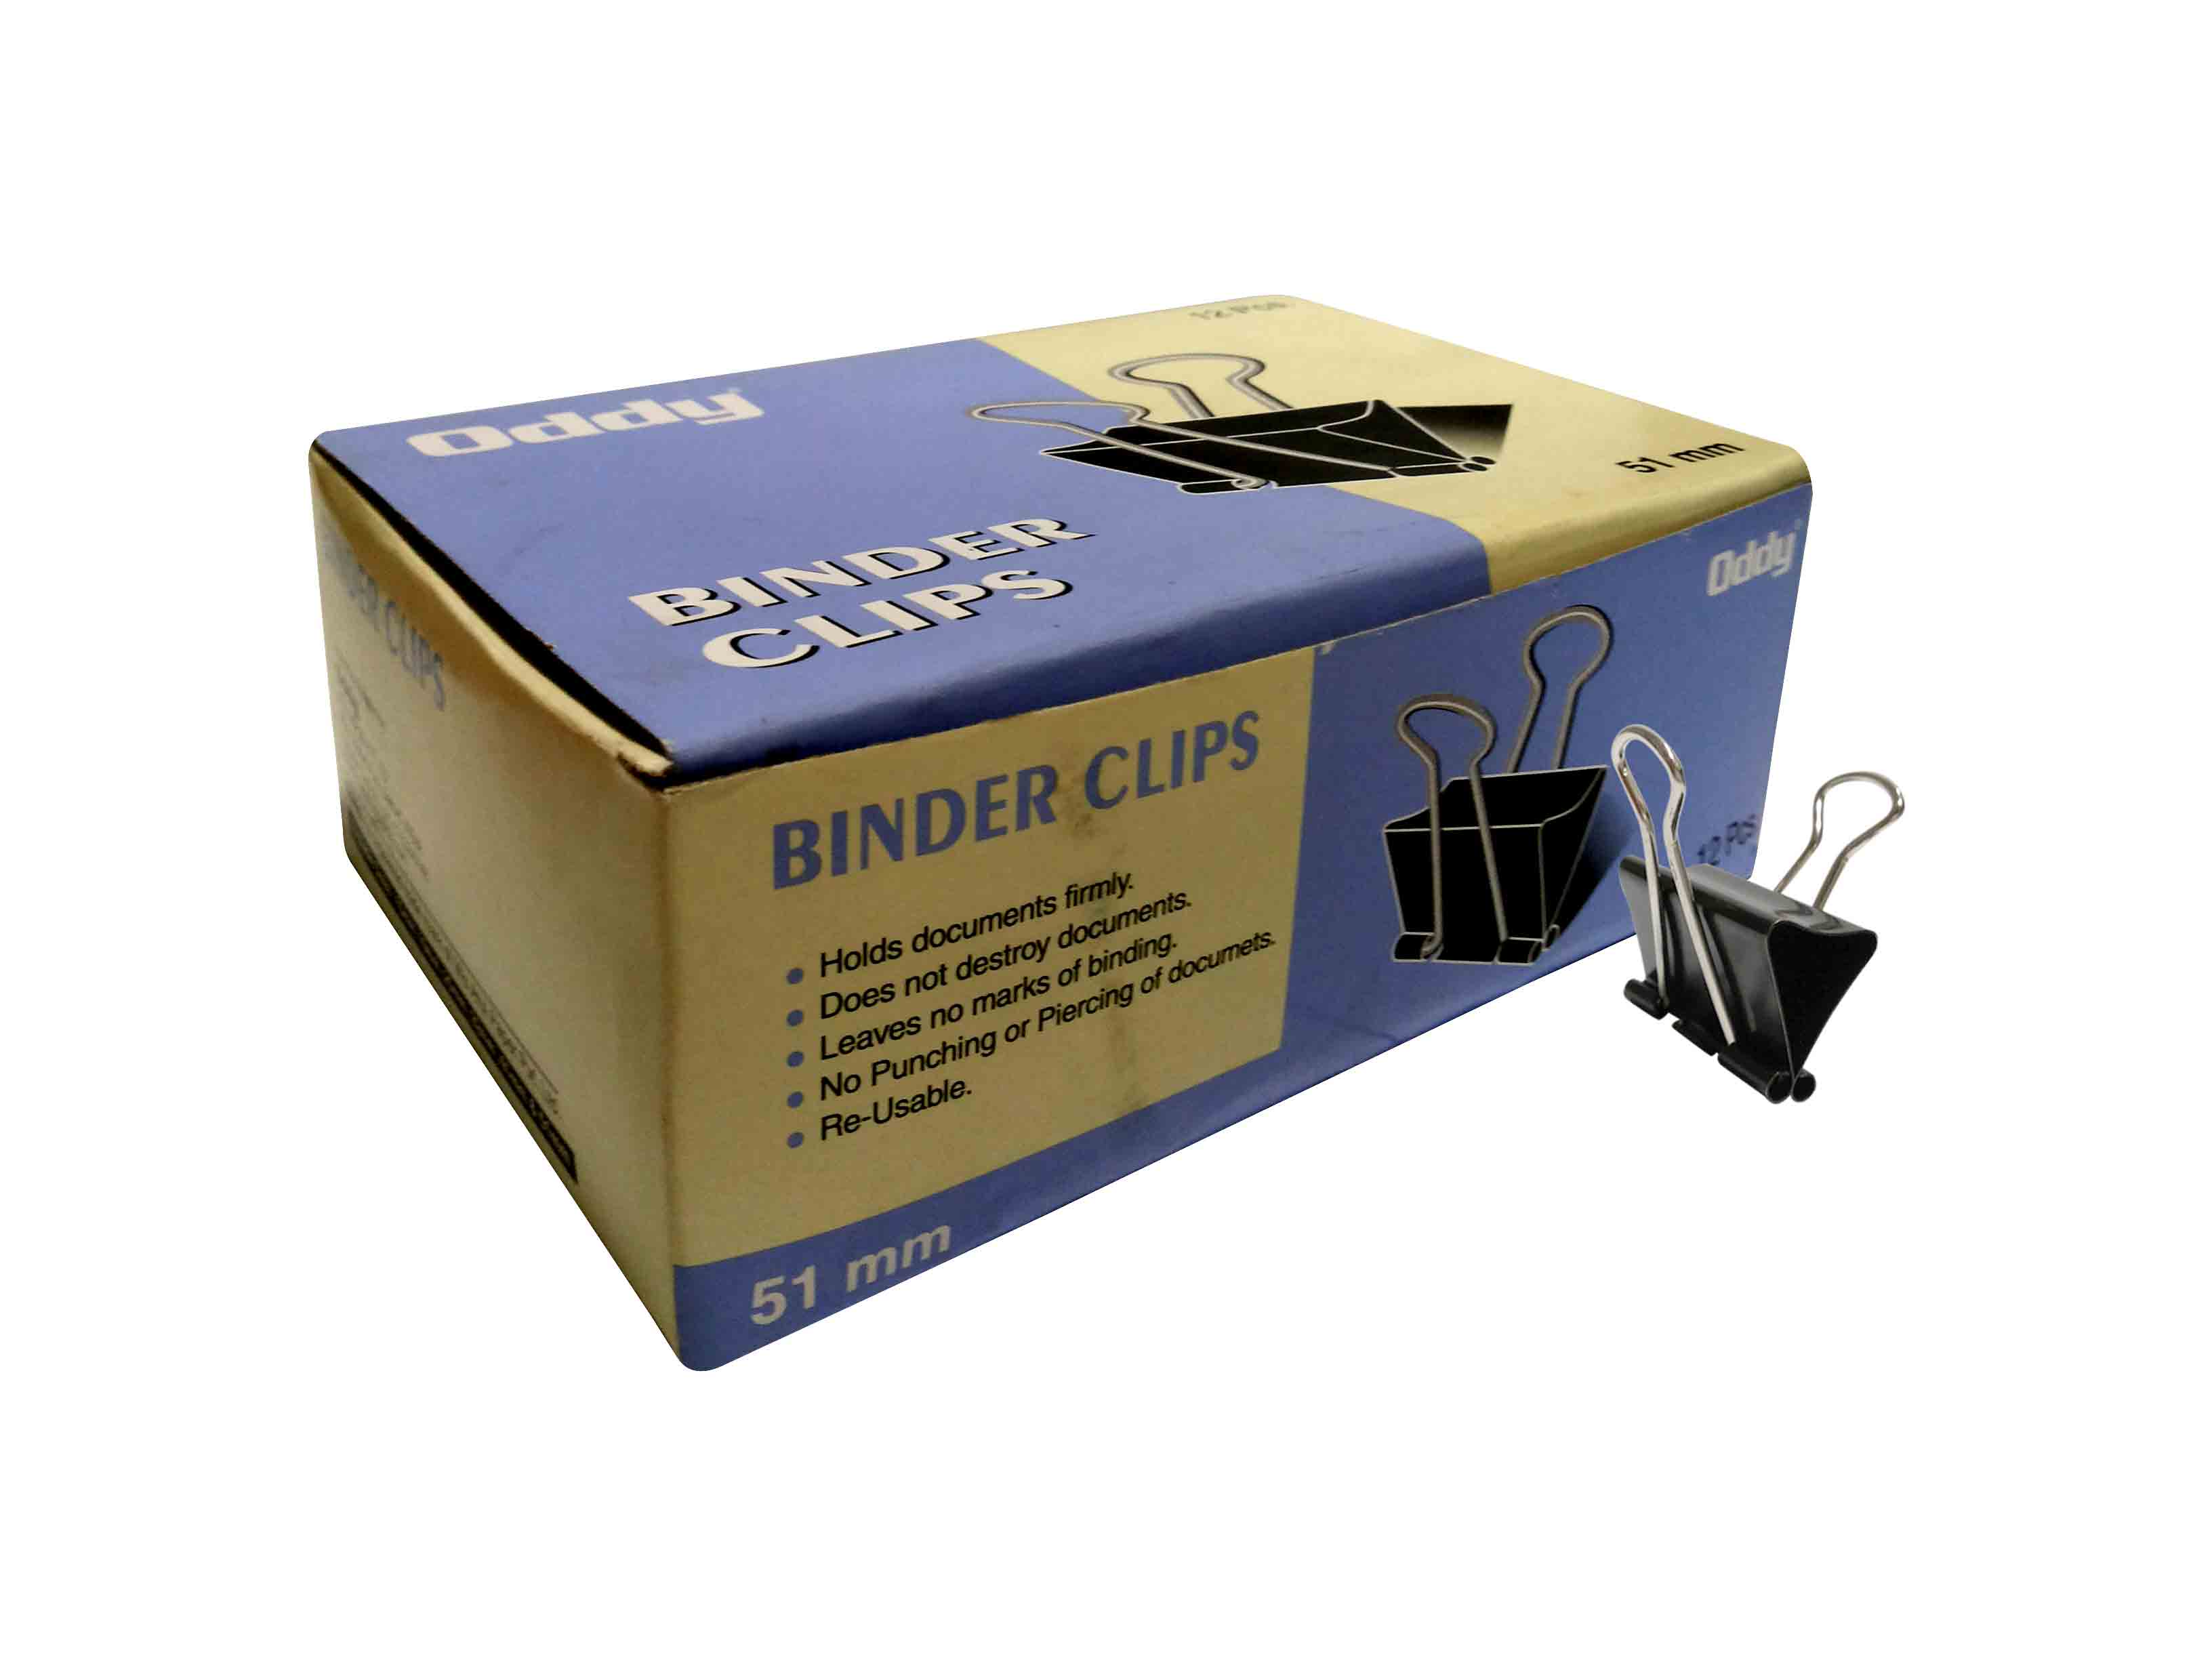 Buy Oddy Binder Clip 51mm Set Of 3 Dozen Online ₹522 From Shopclues